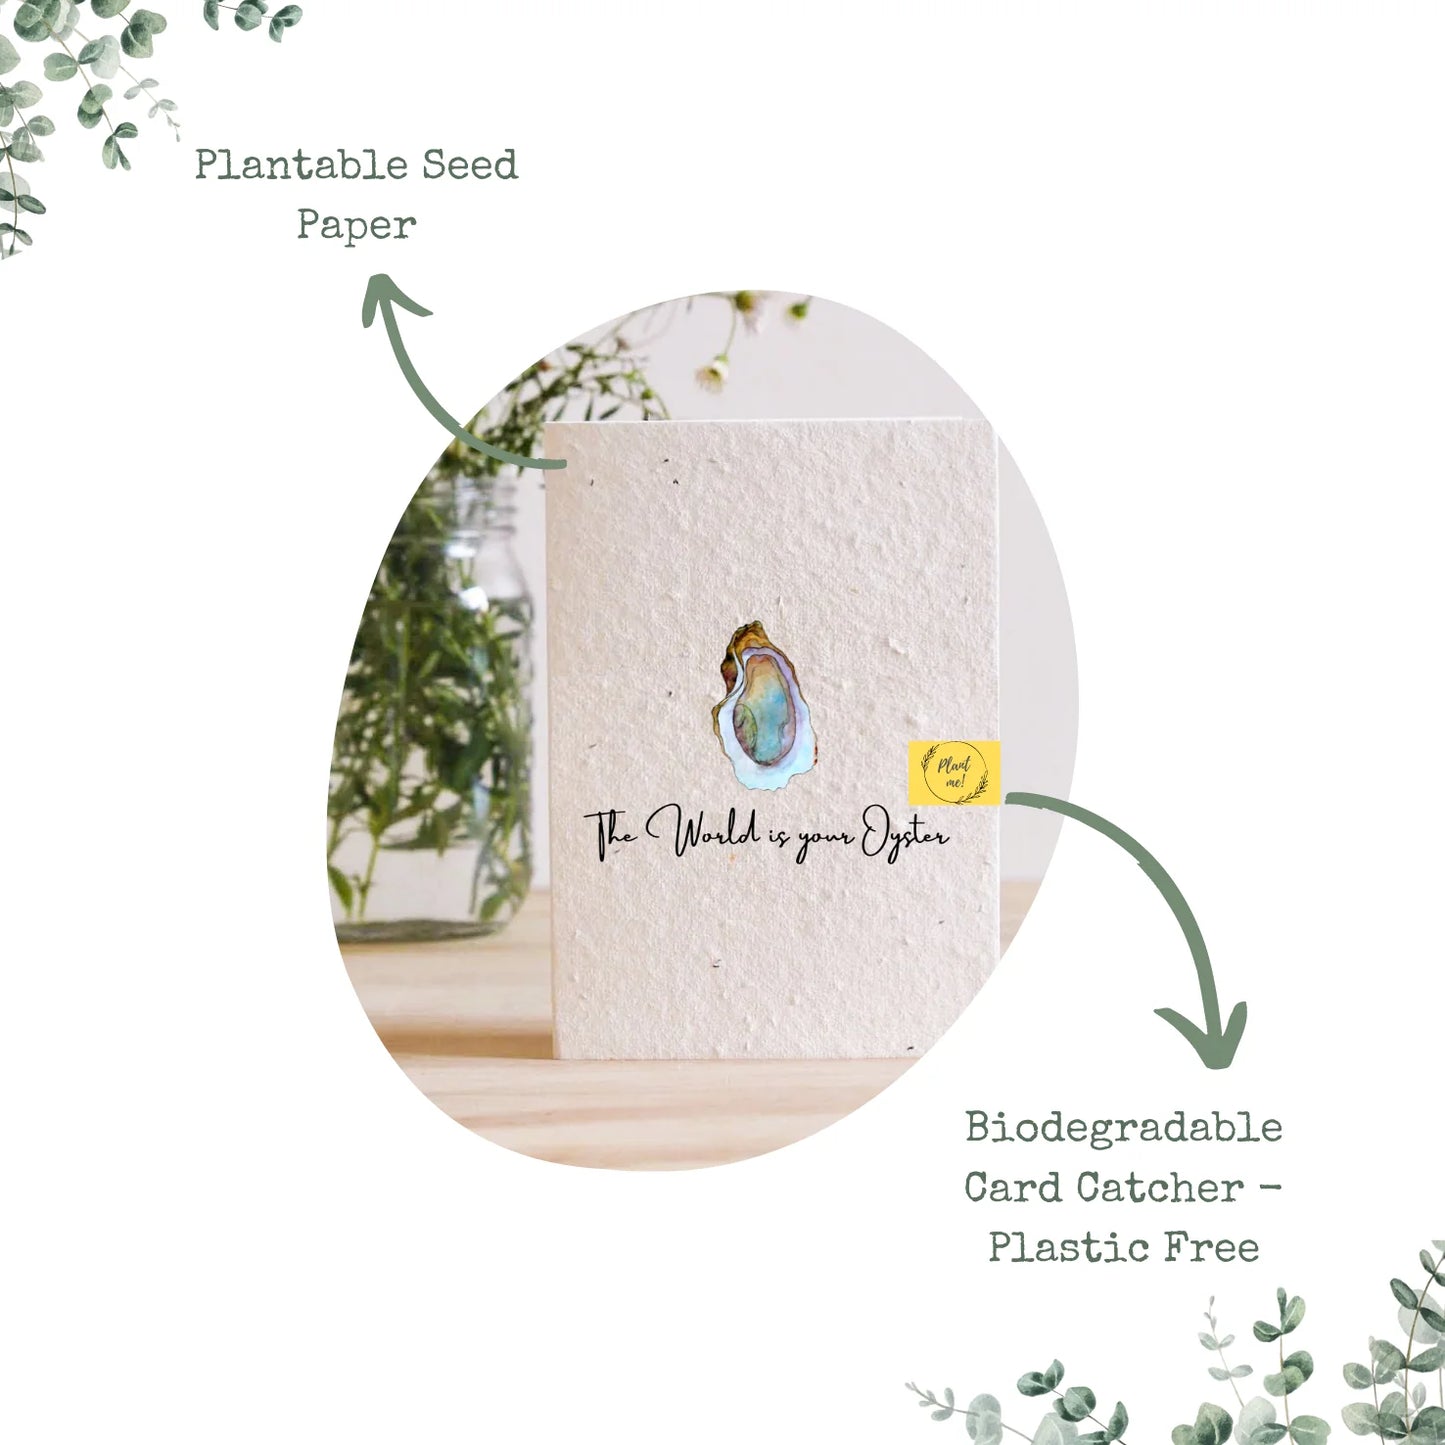 Lus Na Móinte/Bog Rosemary - Plantable Seed Card